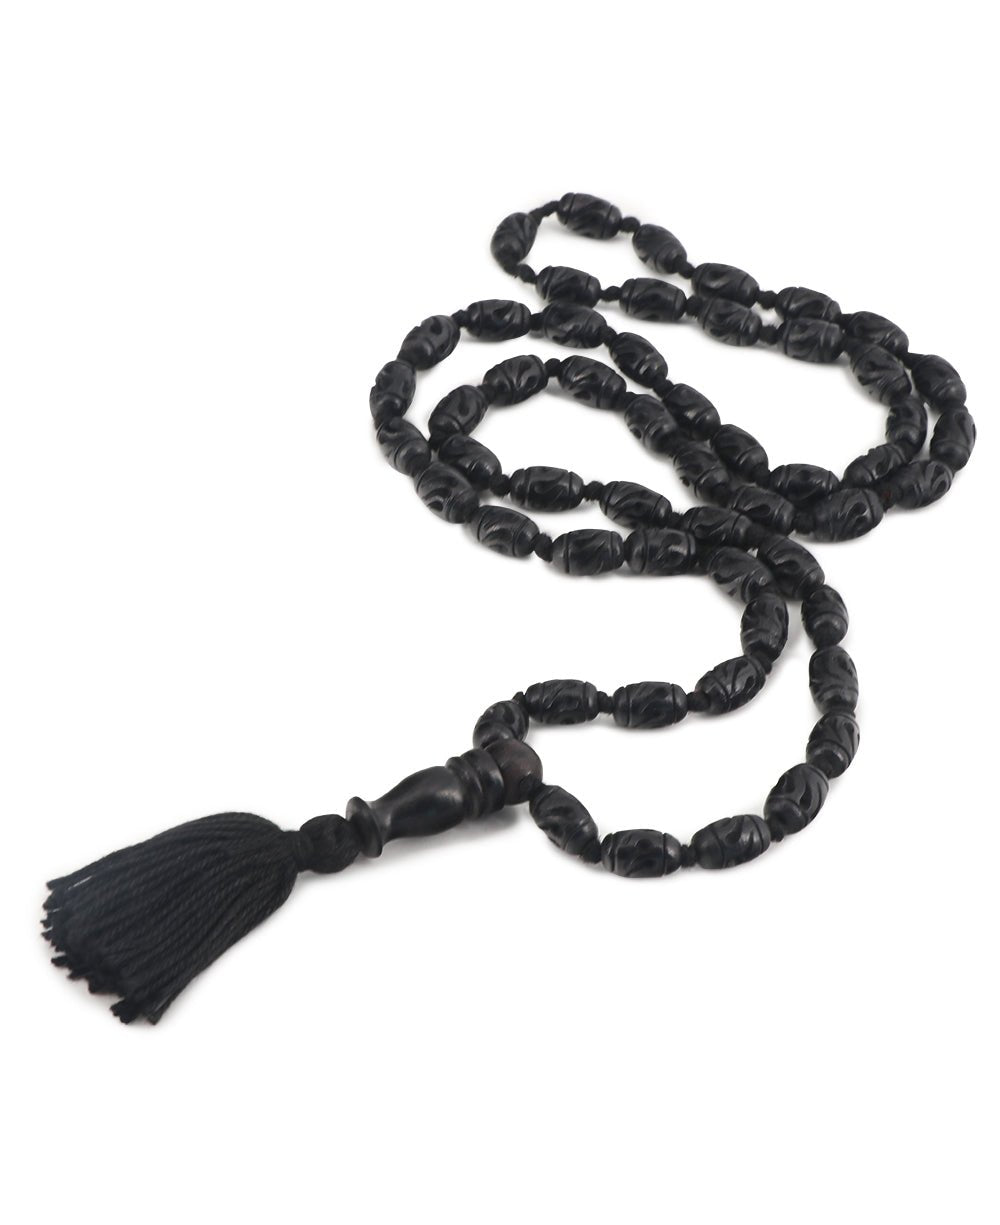 Carved Ebony Wood Meditation Mala with Knotted Beads - Prayer Beads 54 Beads